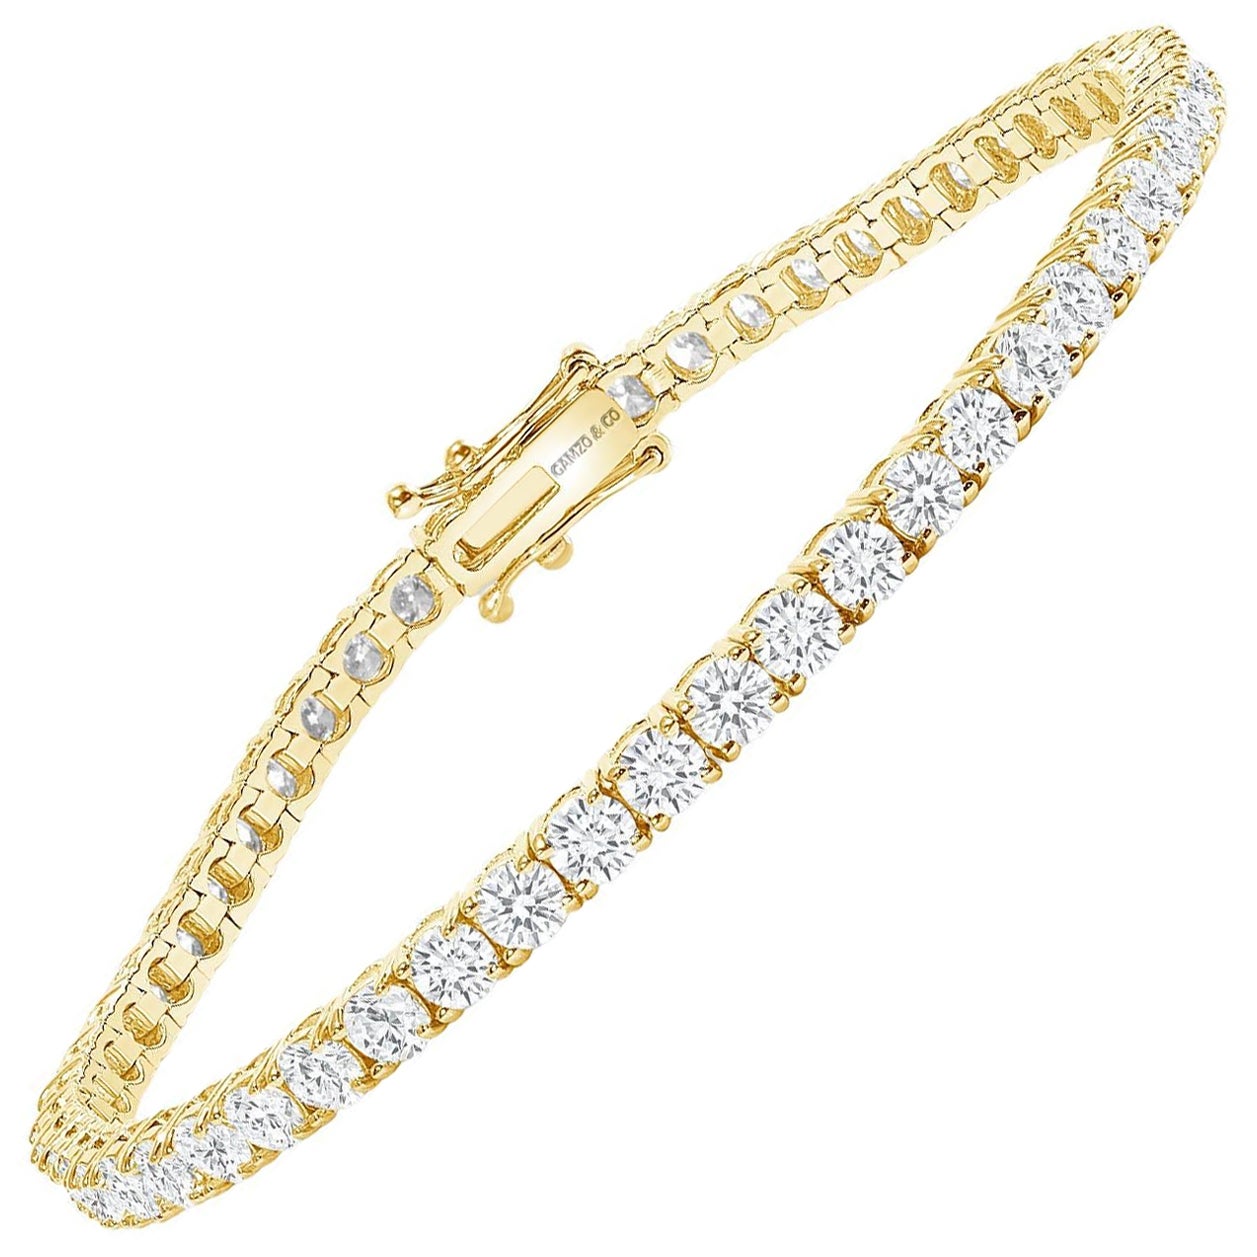 8 Inch 14K Yellow Gold 5 Carat Round Diamond Tennis Bracelet